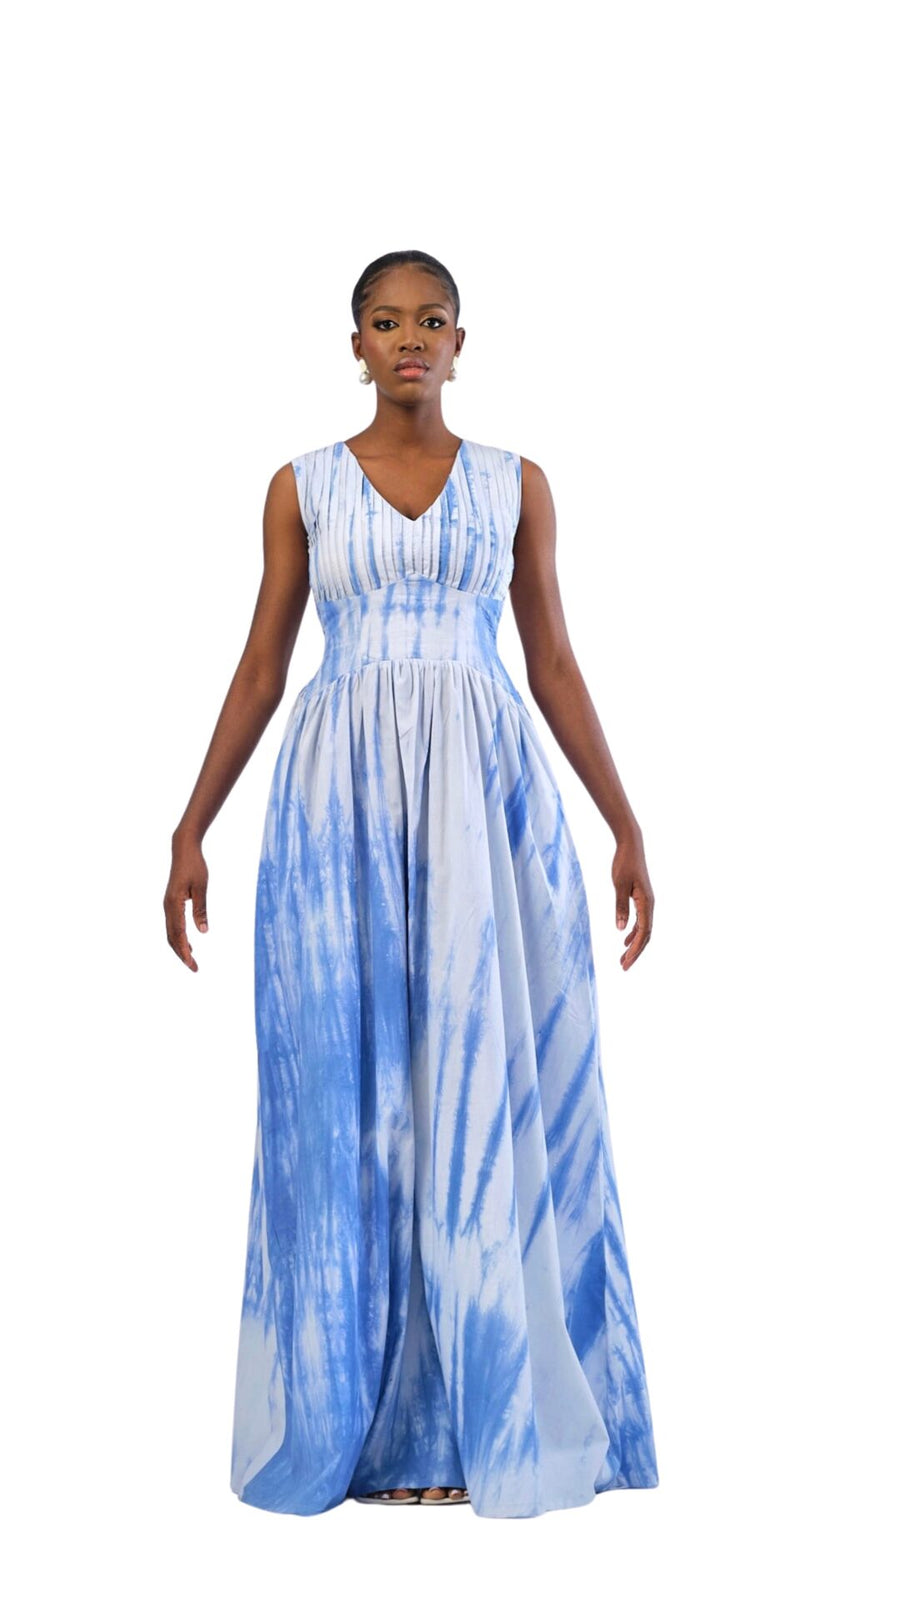 Waterfall Sleeveless Dress - White/Blue